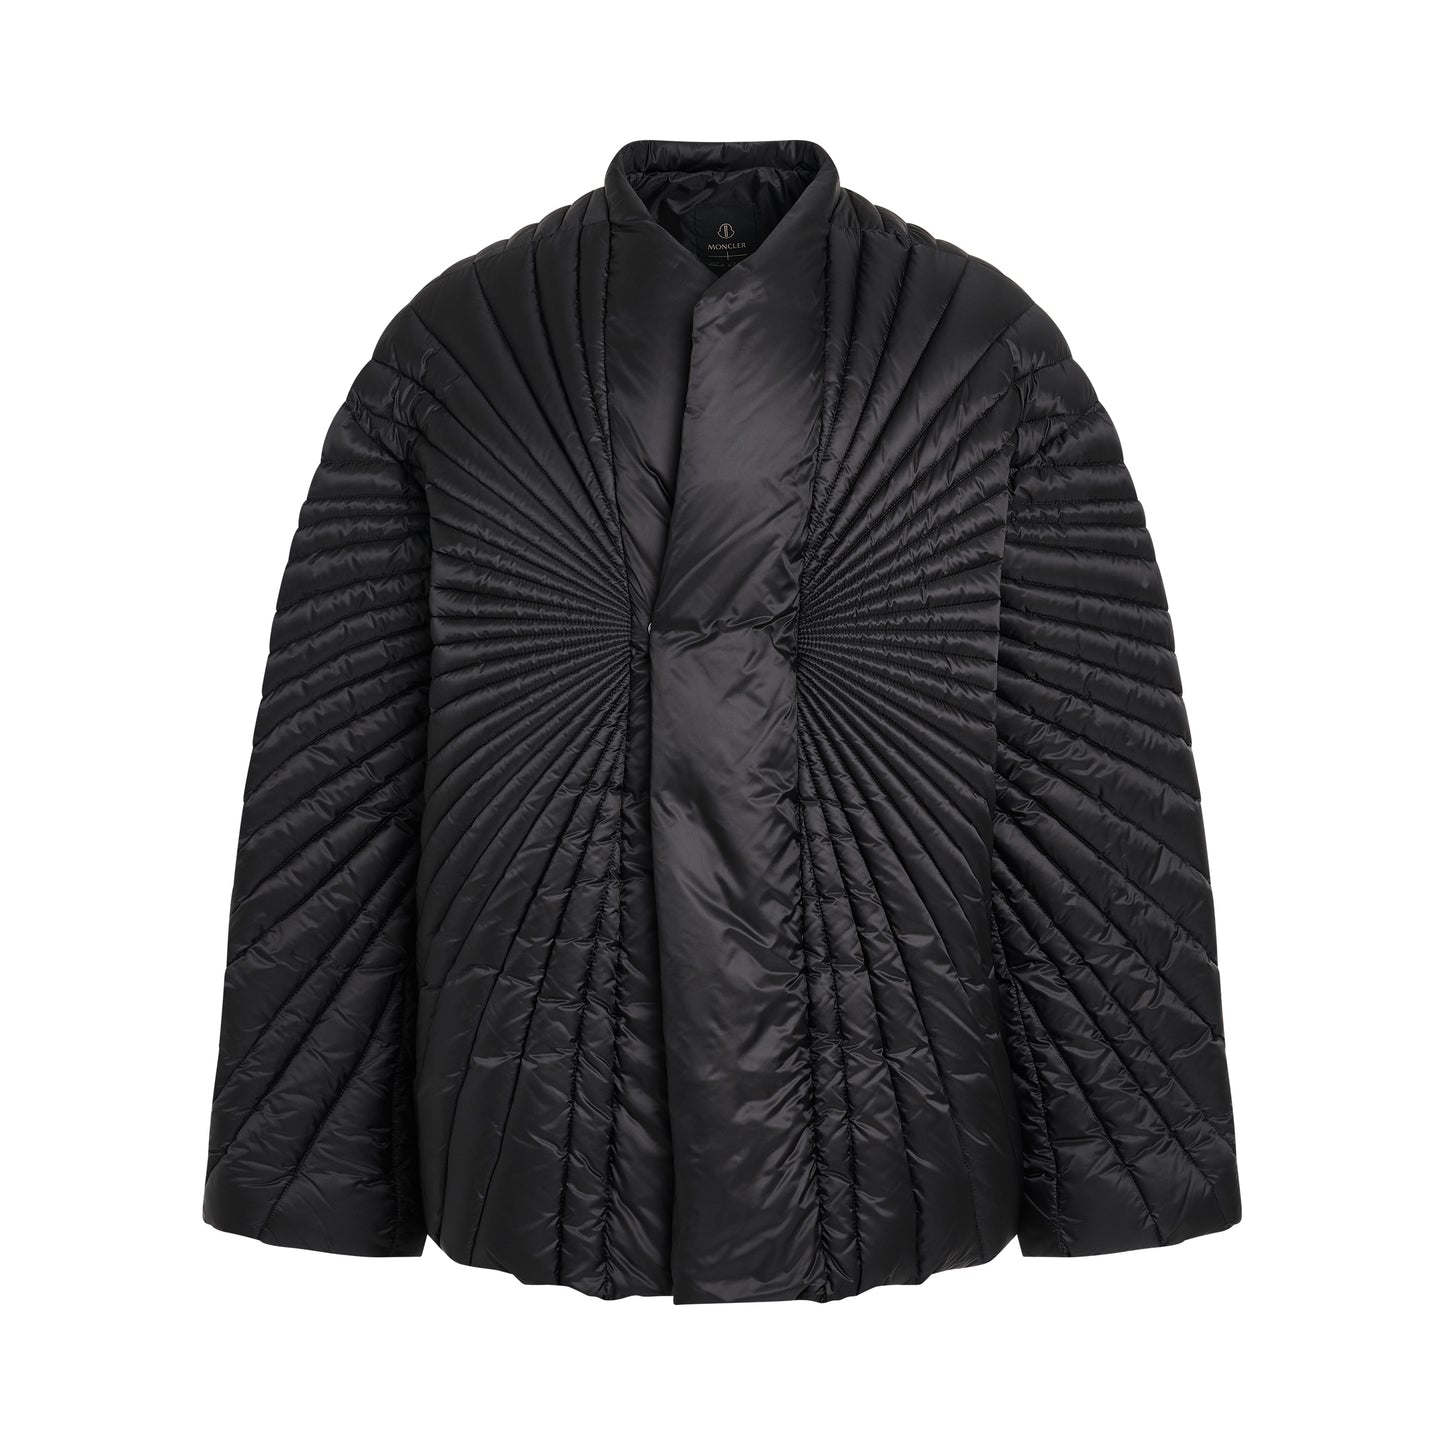 Moncler x Rick Owens Radiance Jacket in Black